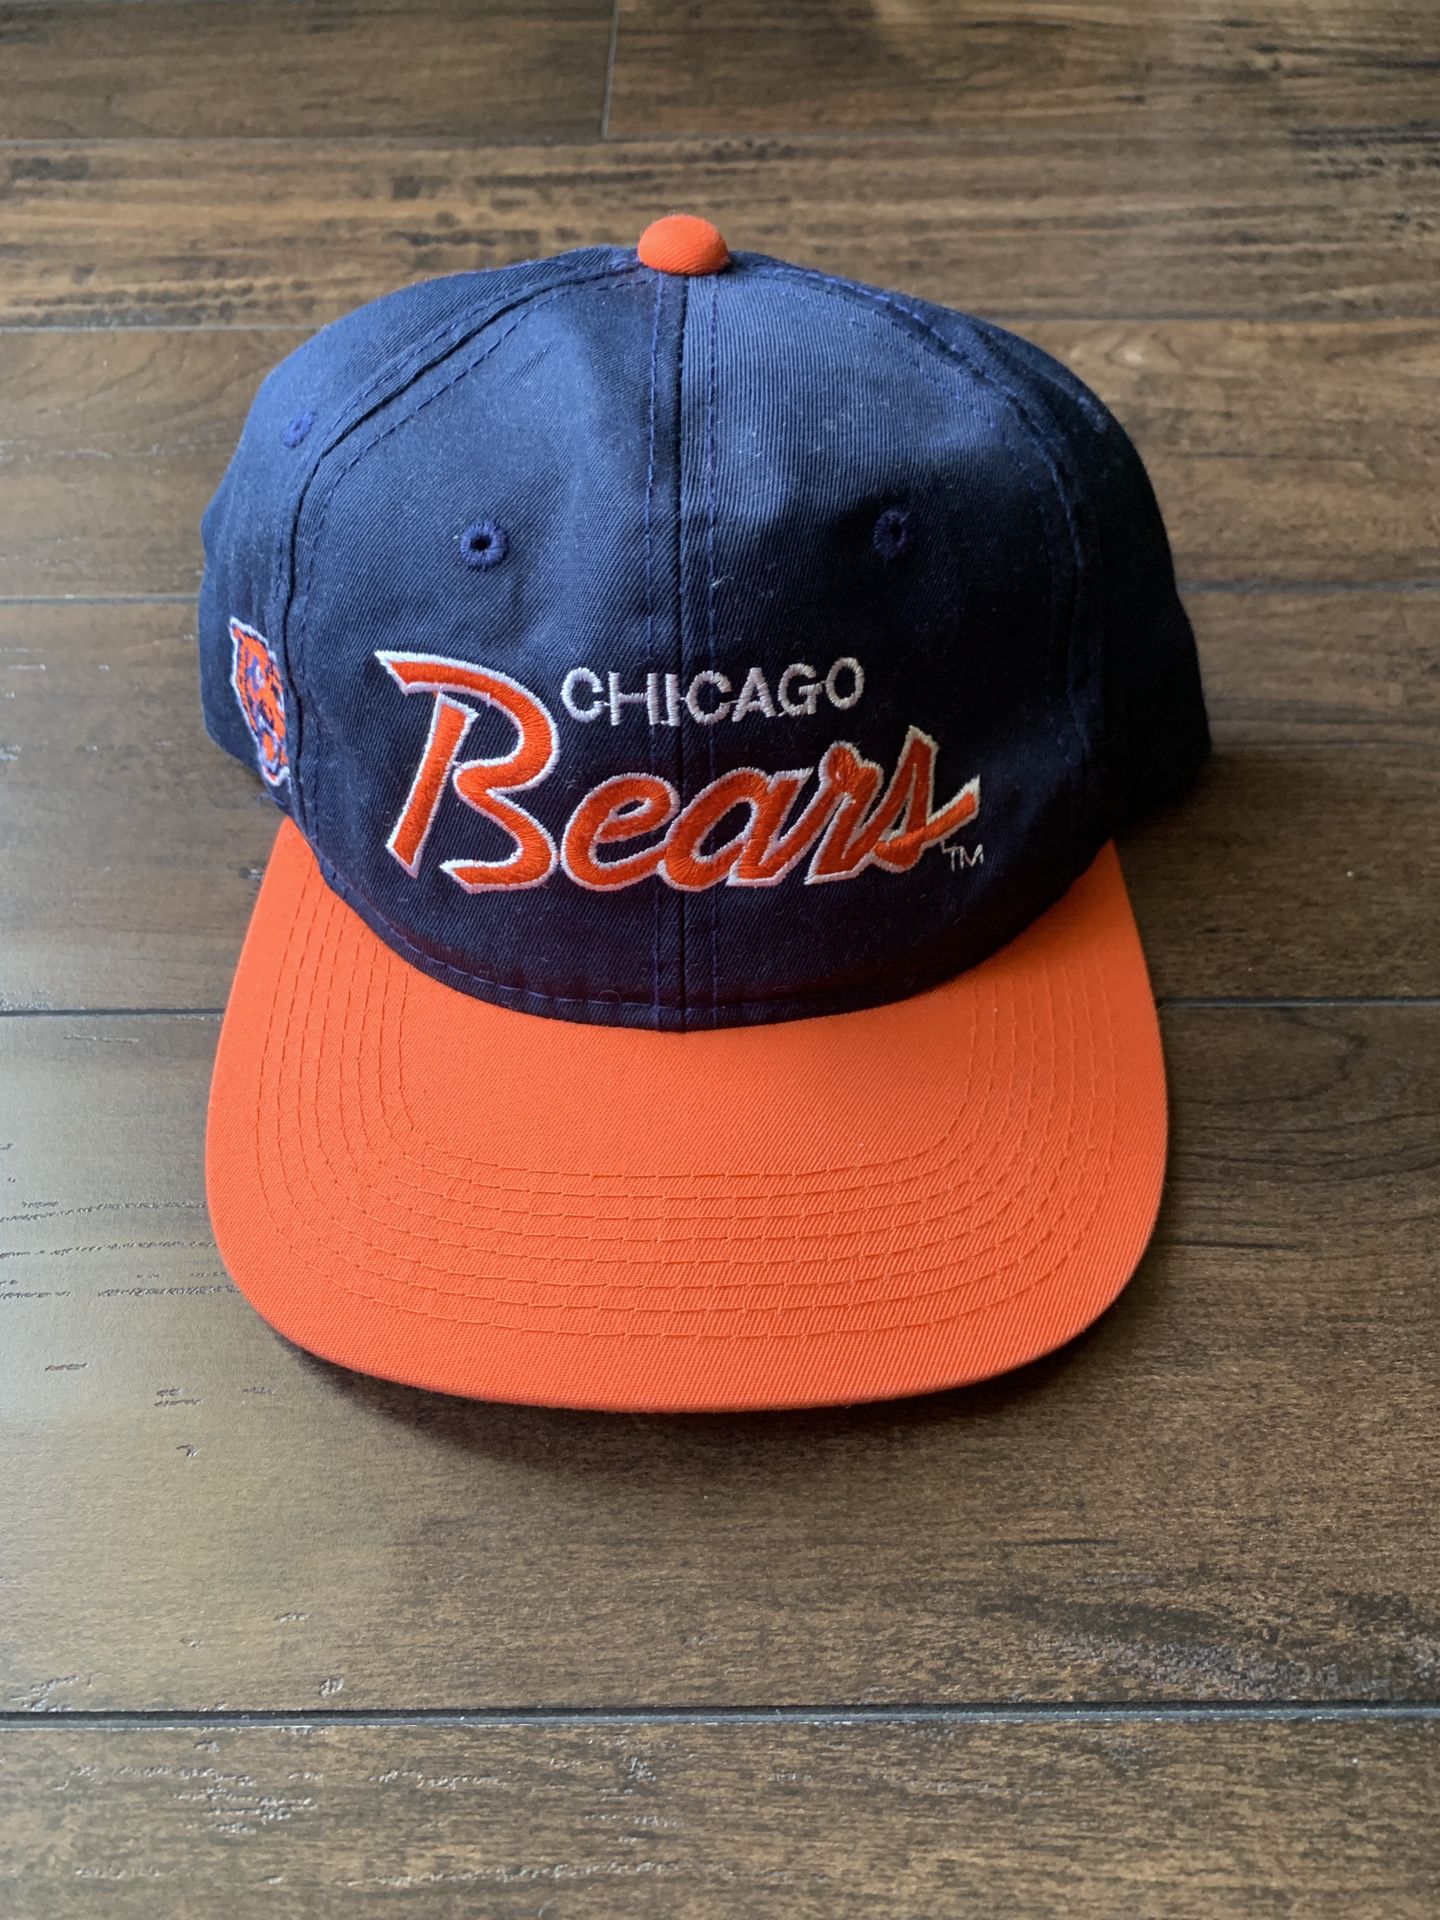 Vintage Chicago Bears Snapback Cap Hat 